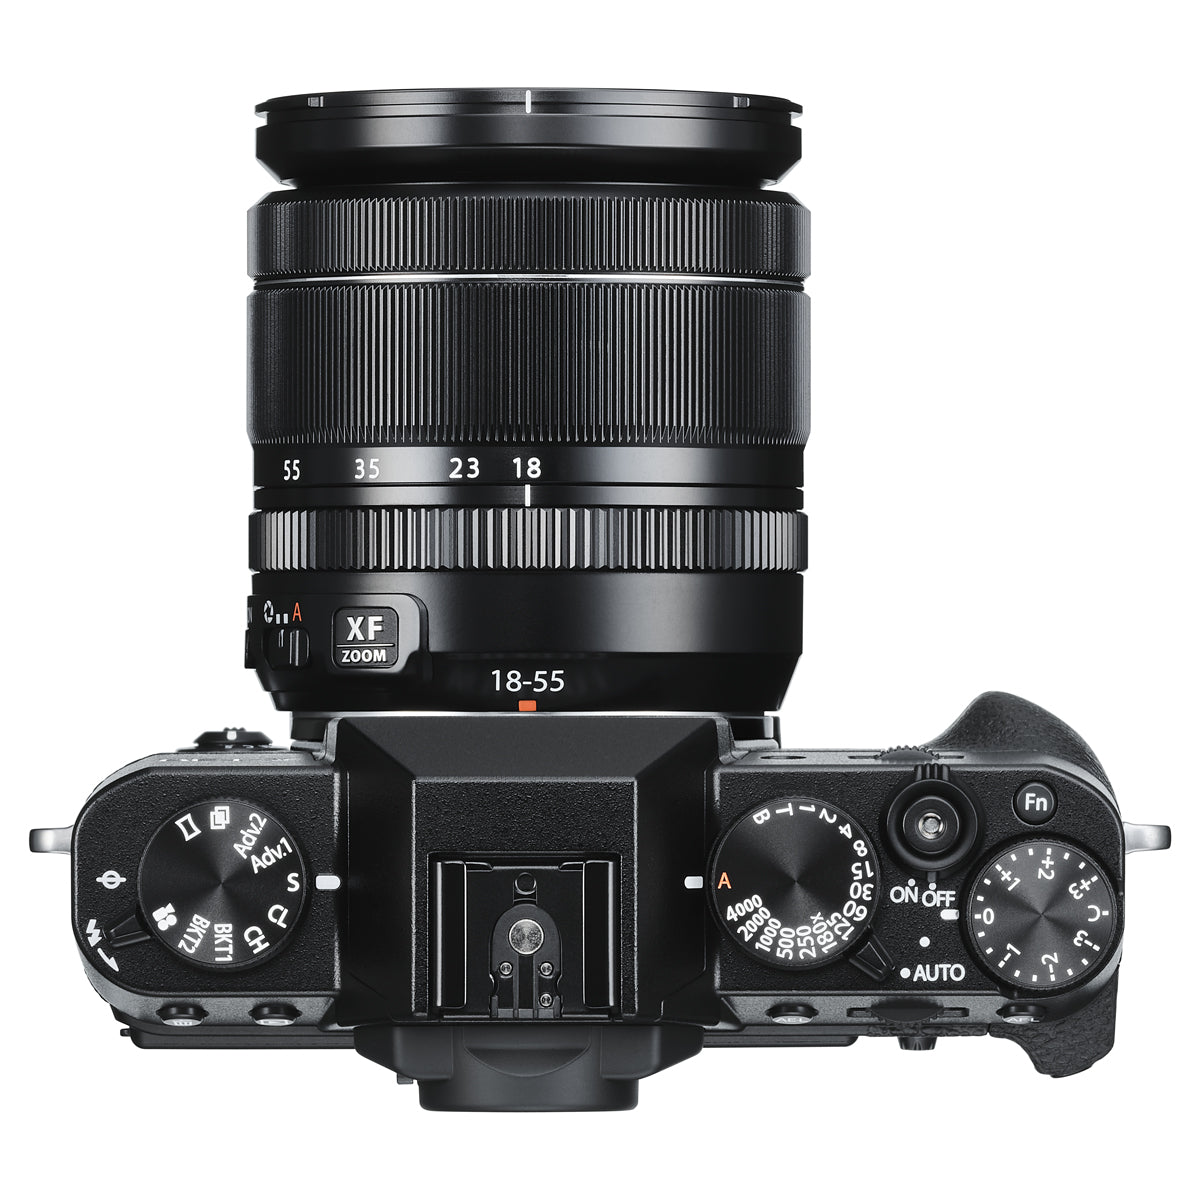 Fujifilm X-T30 Mirrorless Body with XF 18-55mm Lens Kit (Black)